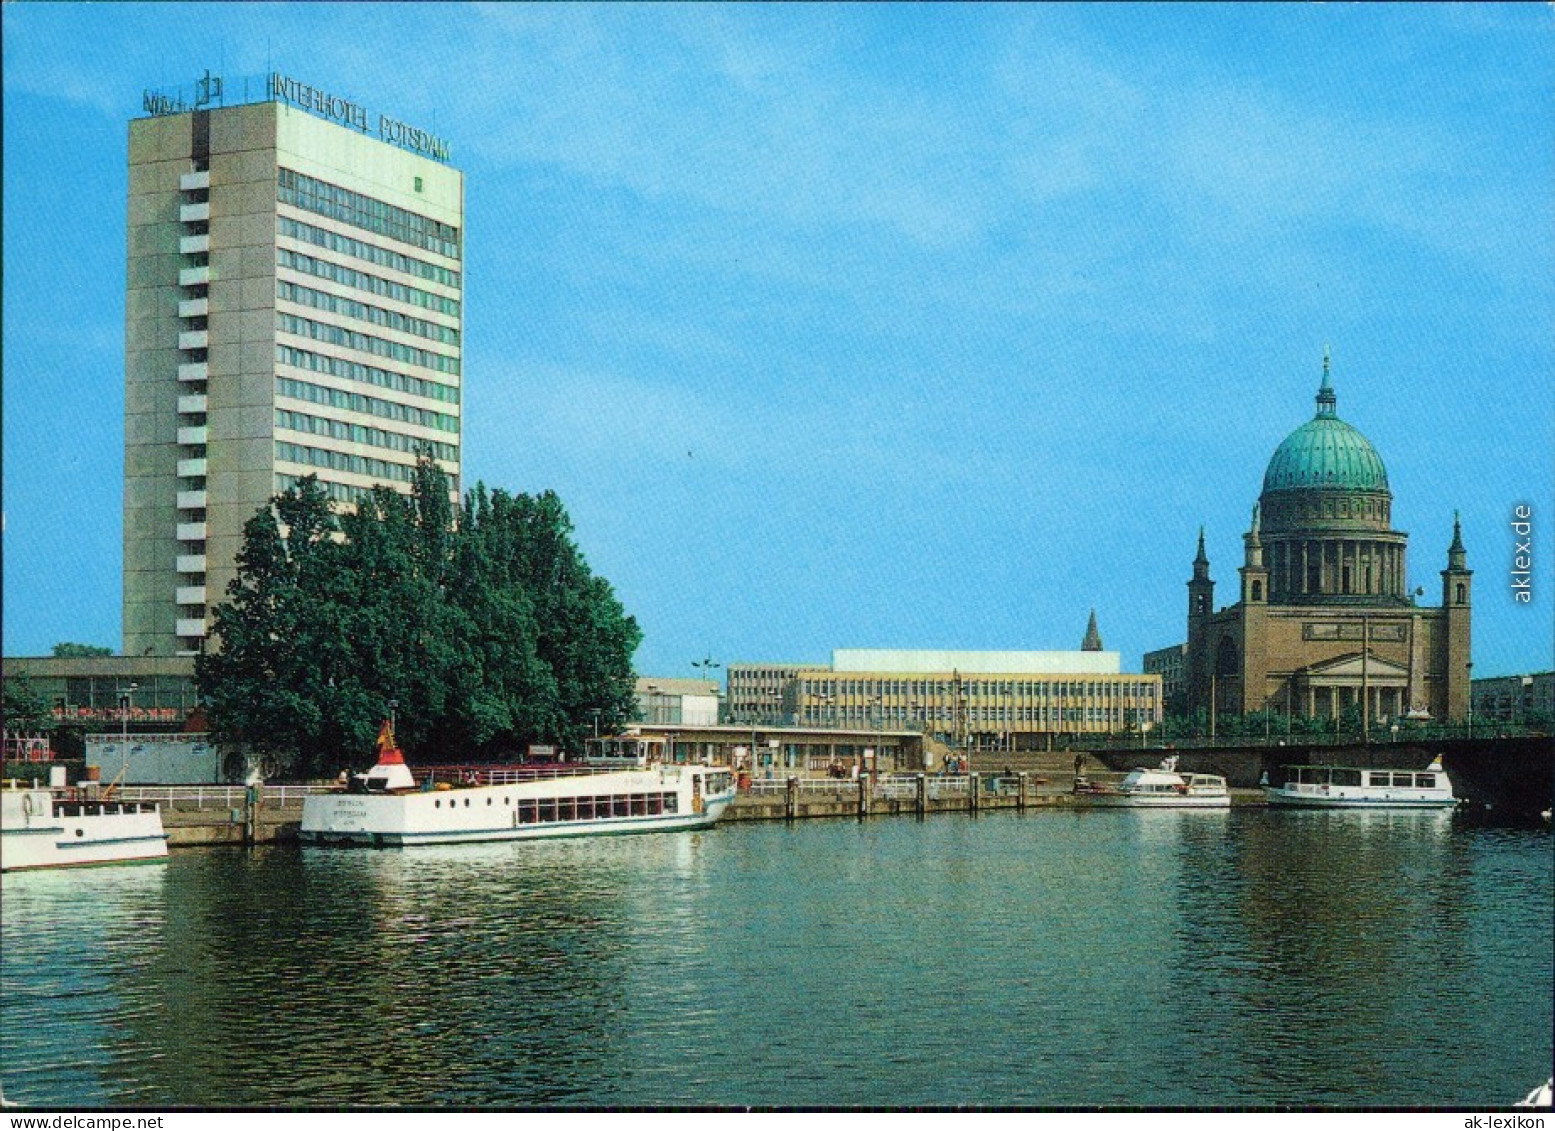 Ansichtskarte Potsdam Interhotel "Potsdam" Mit St. Nikolaikirche 1988 - Potsdam